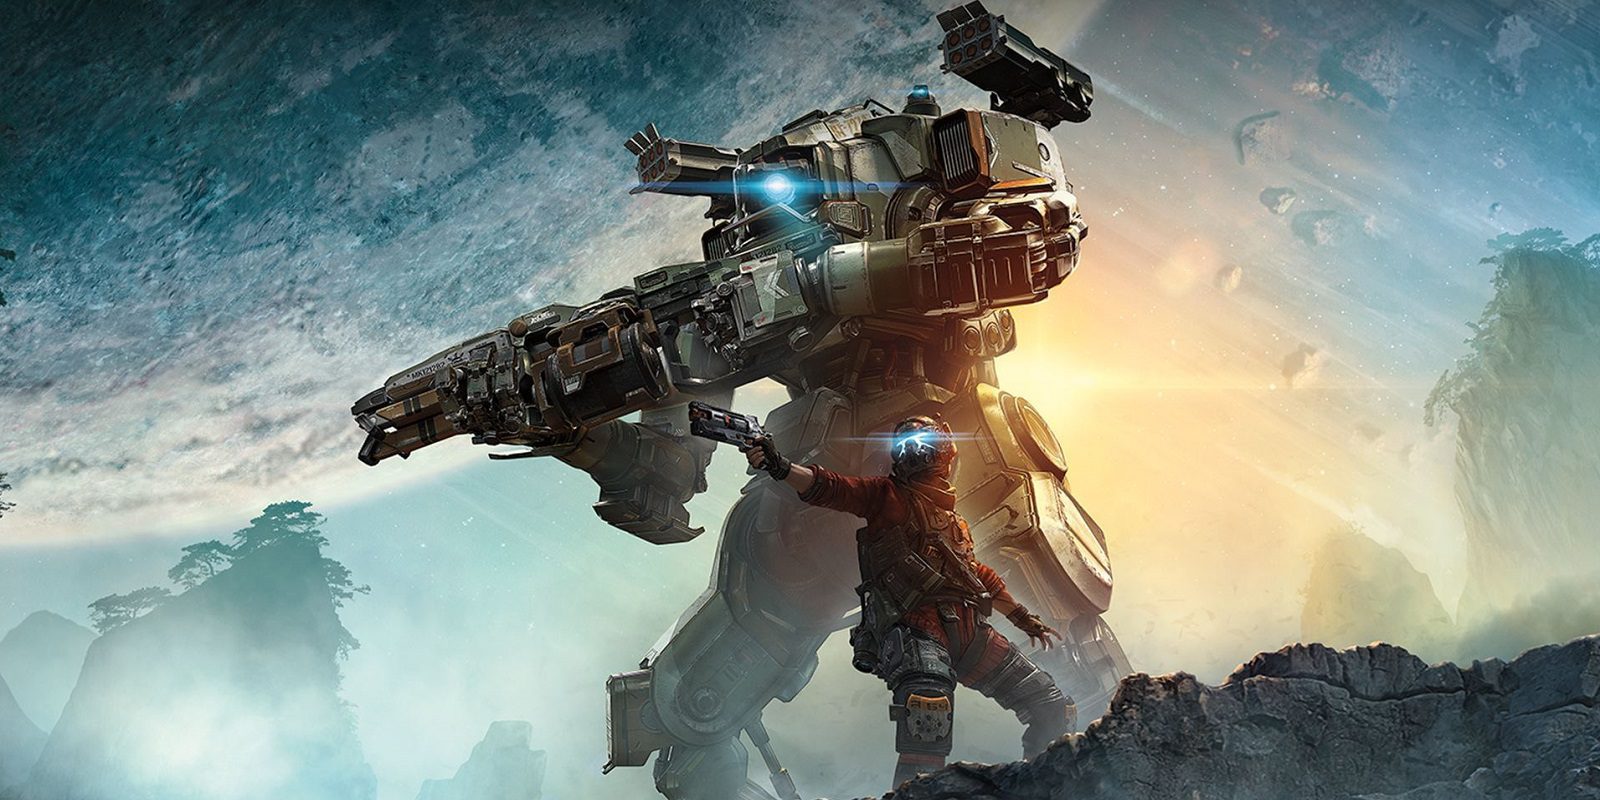 El futuro de 'Titanfall' como saga está asegurado según EA